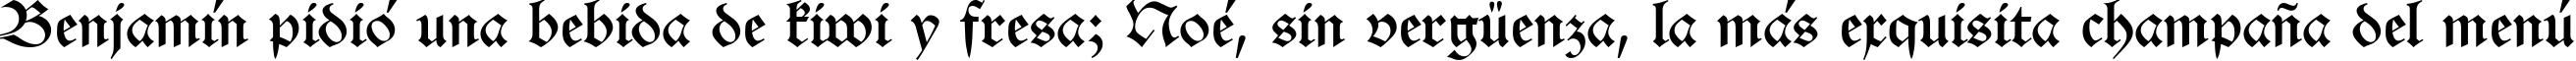 Пример написания шрифтом Alte Schwabacher текста на испанском